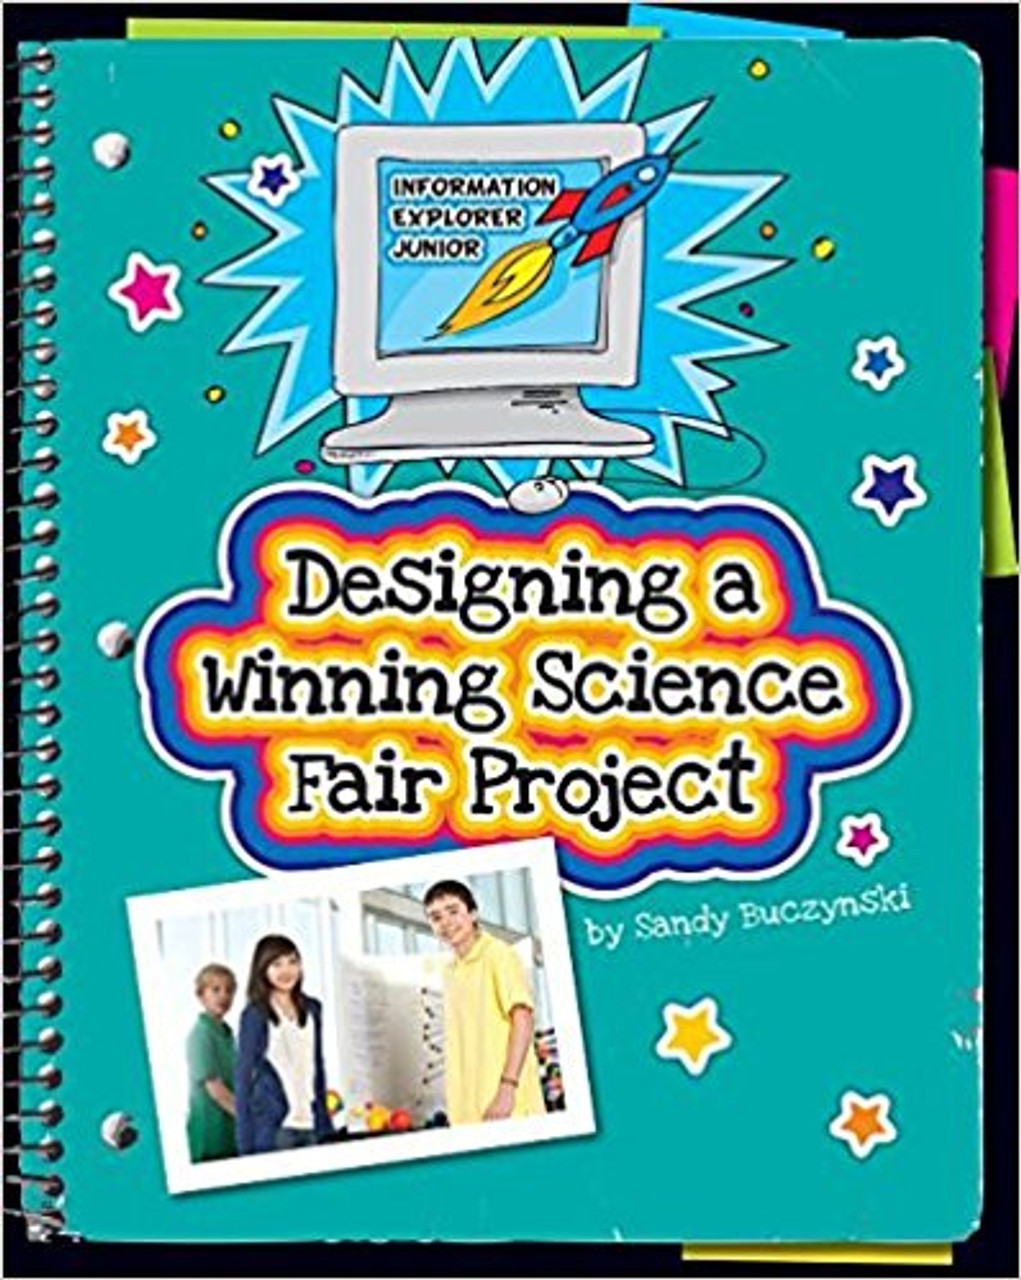 Designing a Winning Science Fair Project by Sandy Buczynski